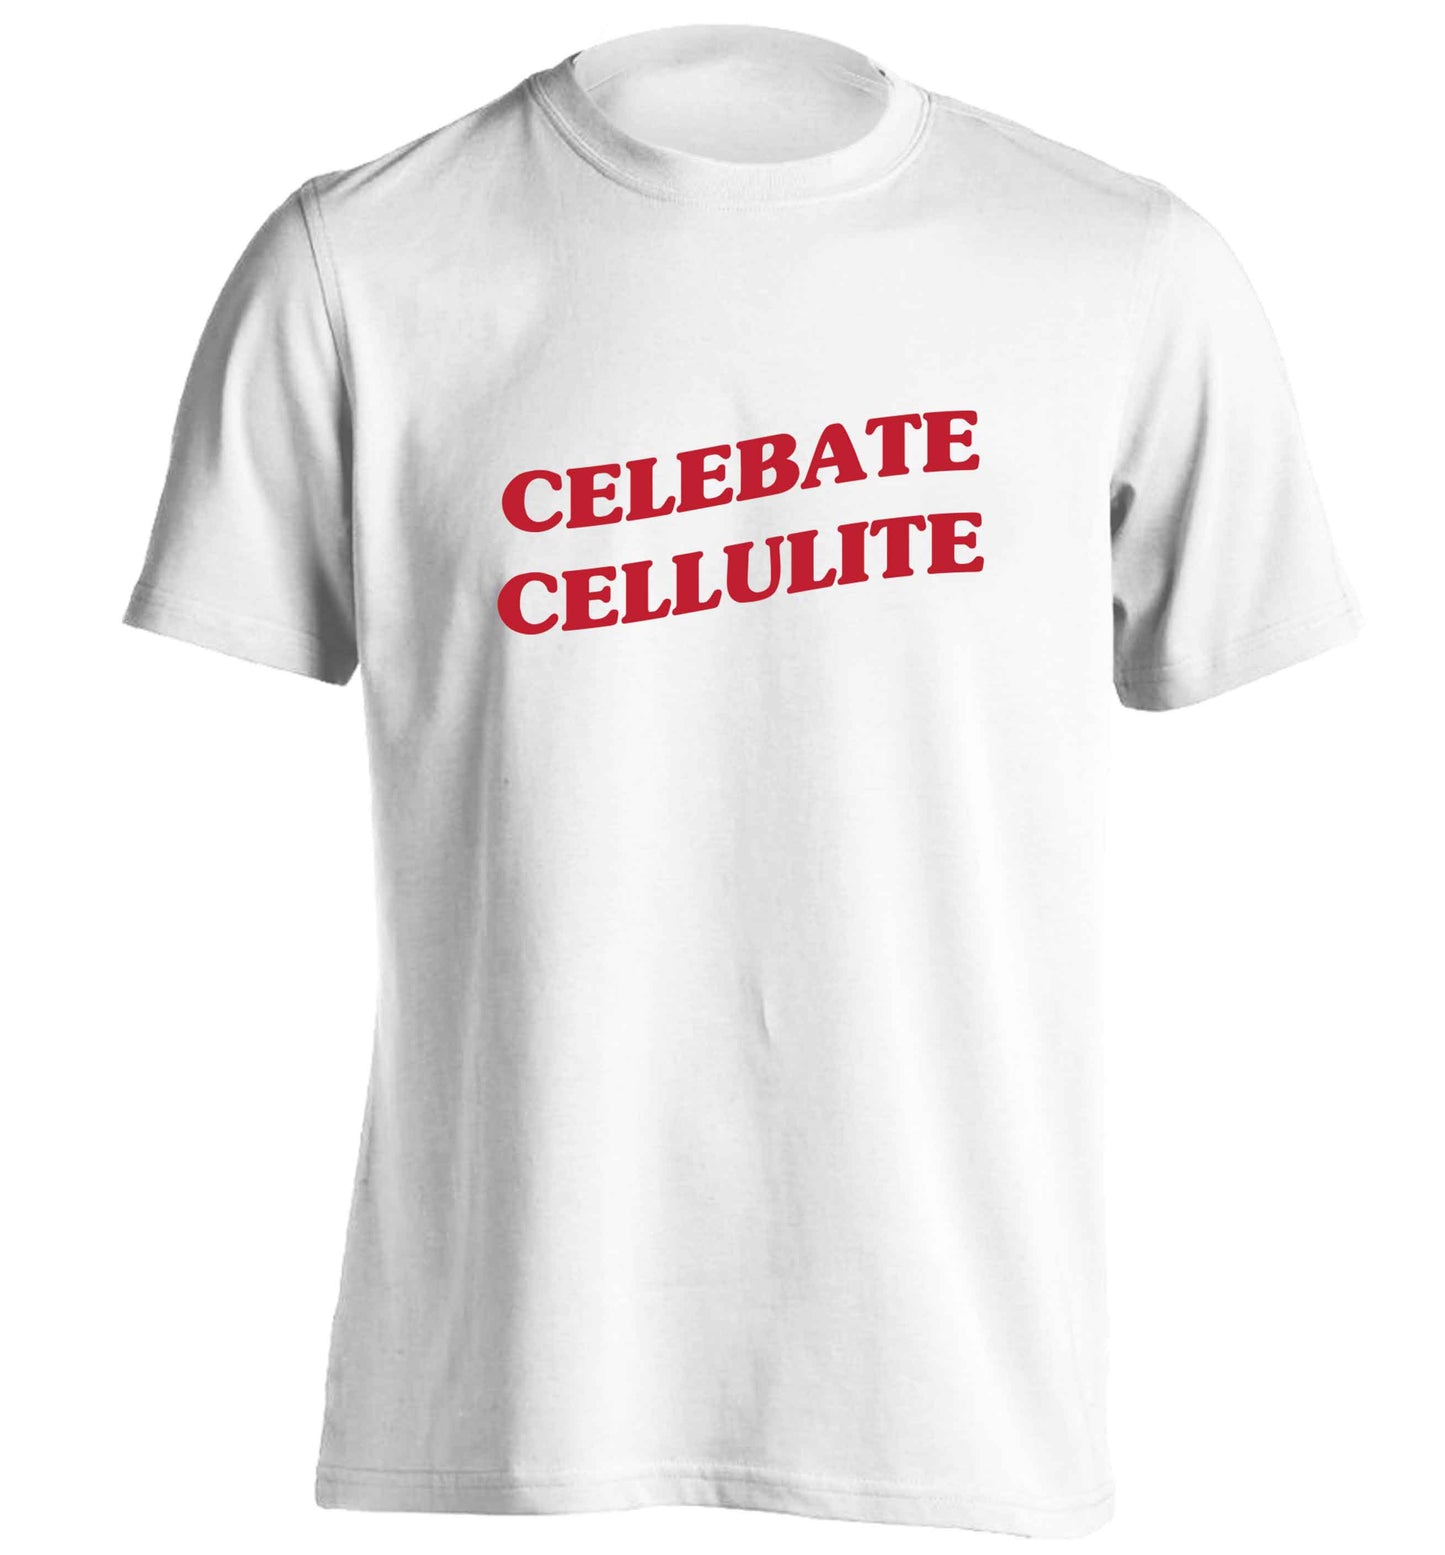 Celebrate cellulite adults unisex white Tshirt 2XL